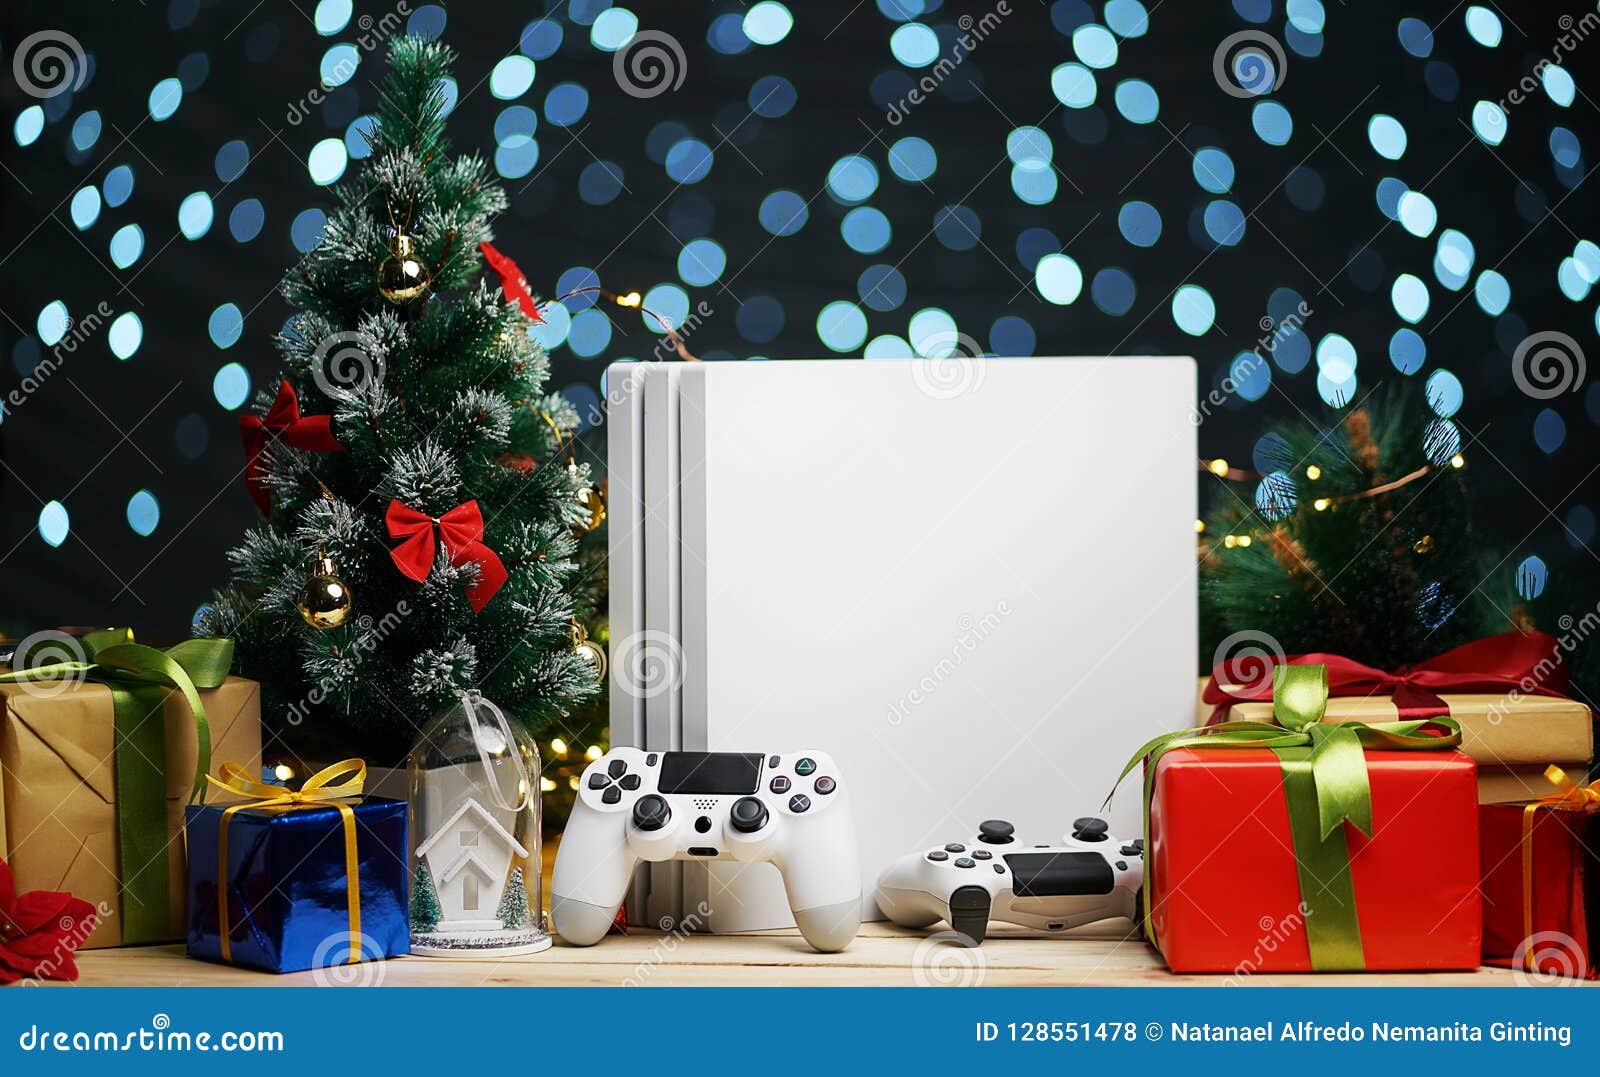 Confira presentes gamers para o Natal